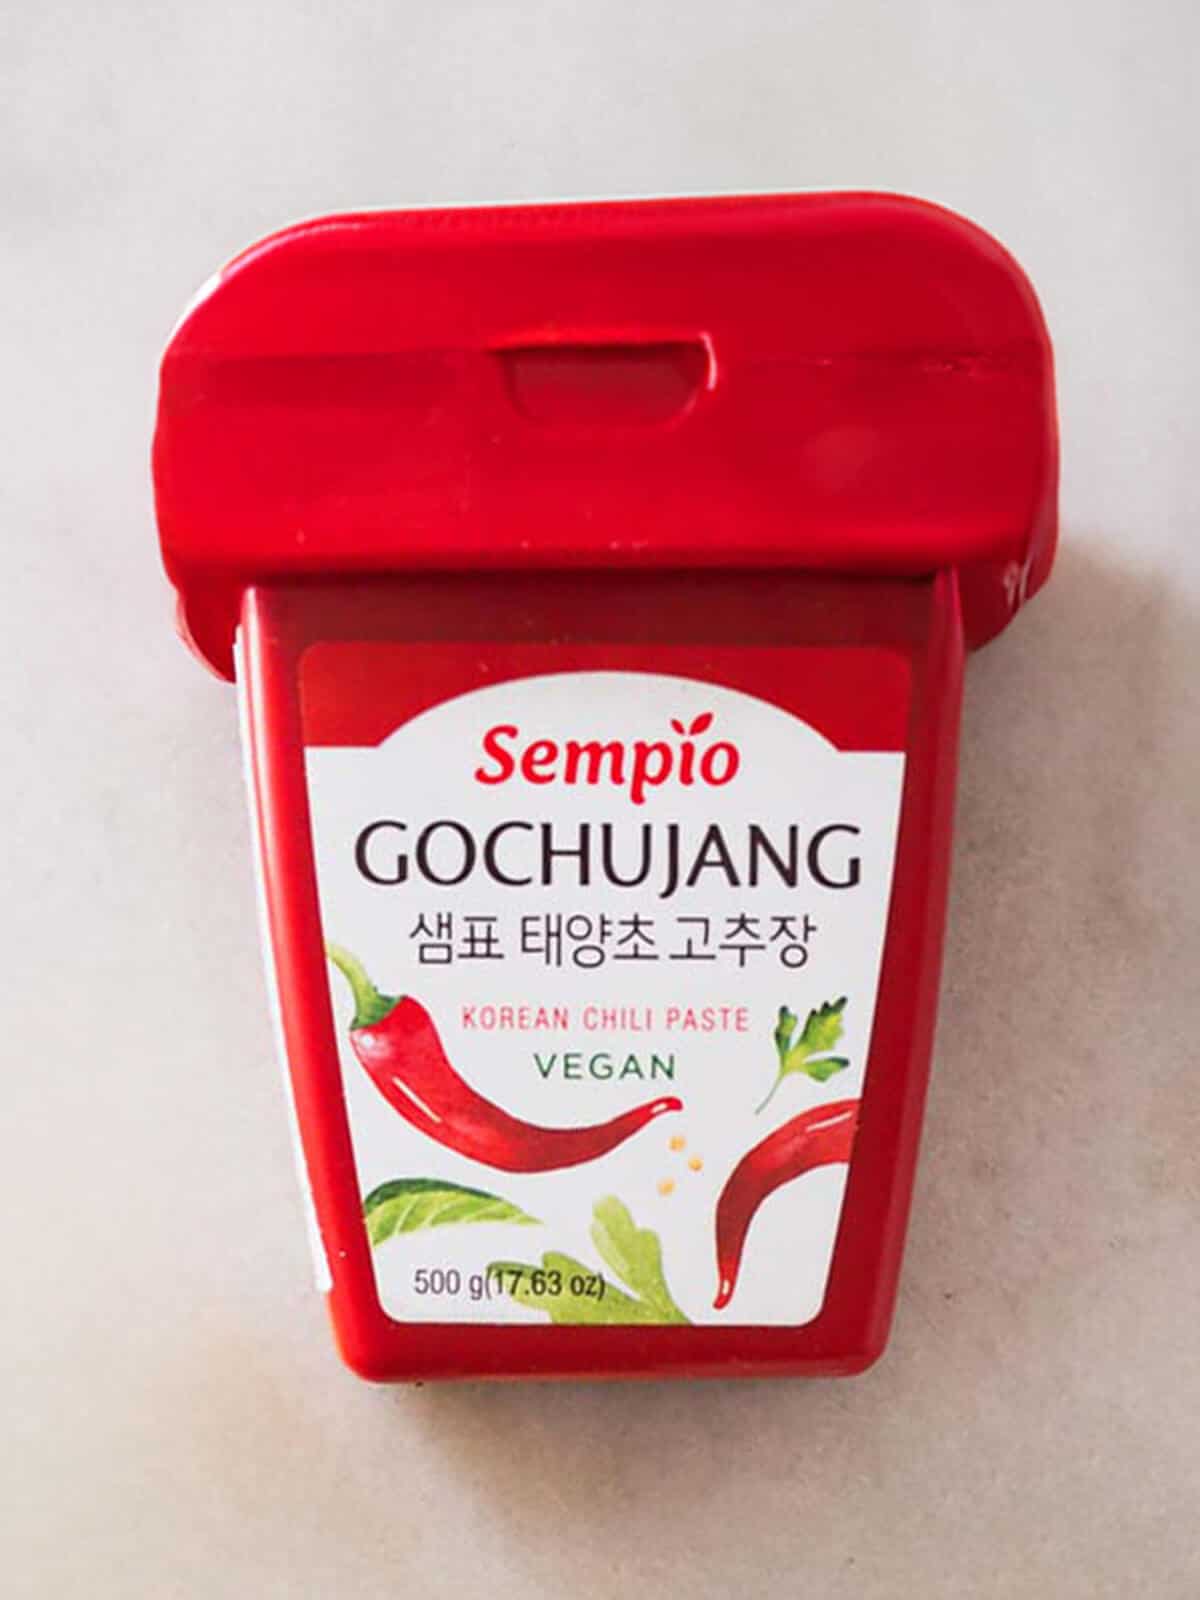 pack of Gochujang Korean spicy sauce paste.